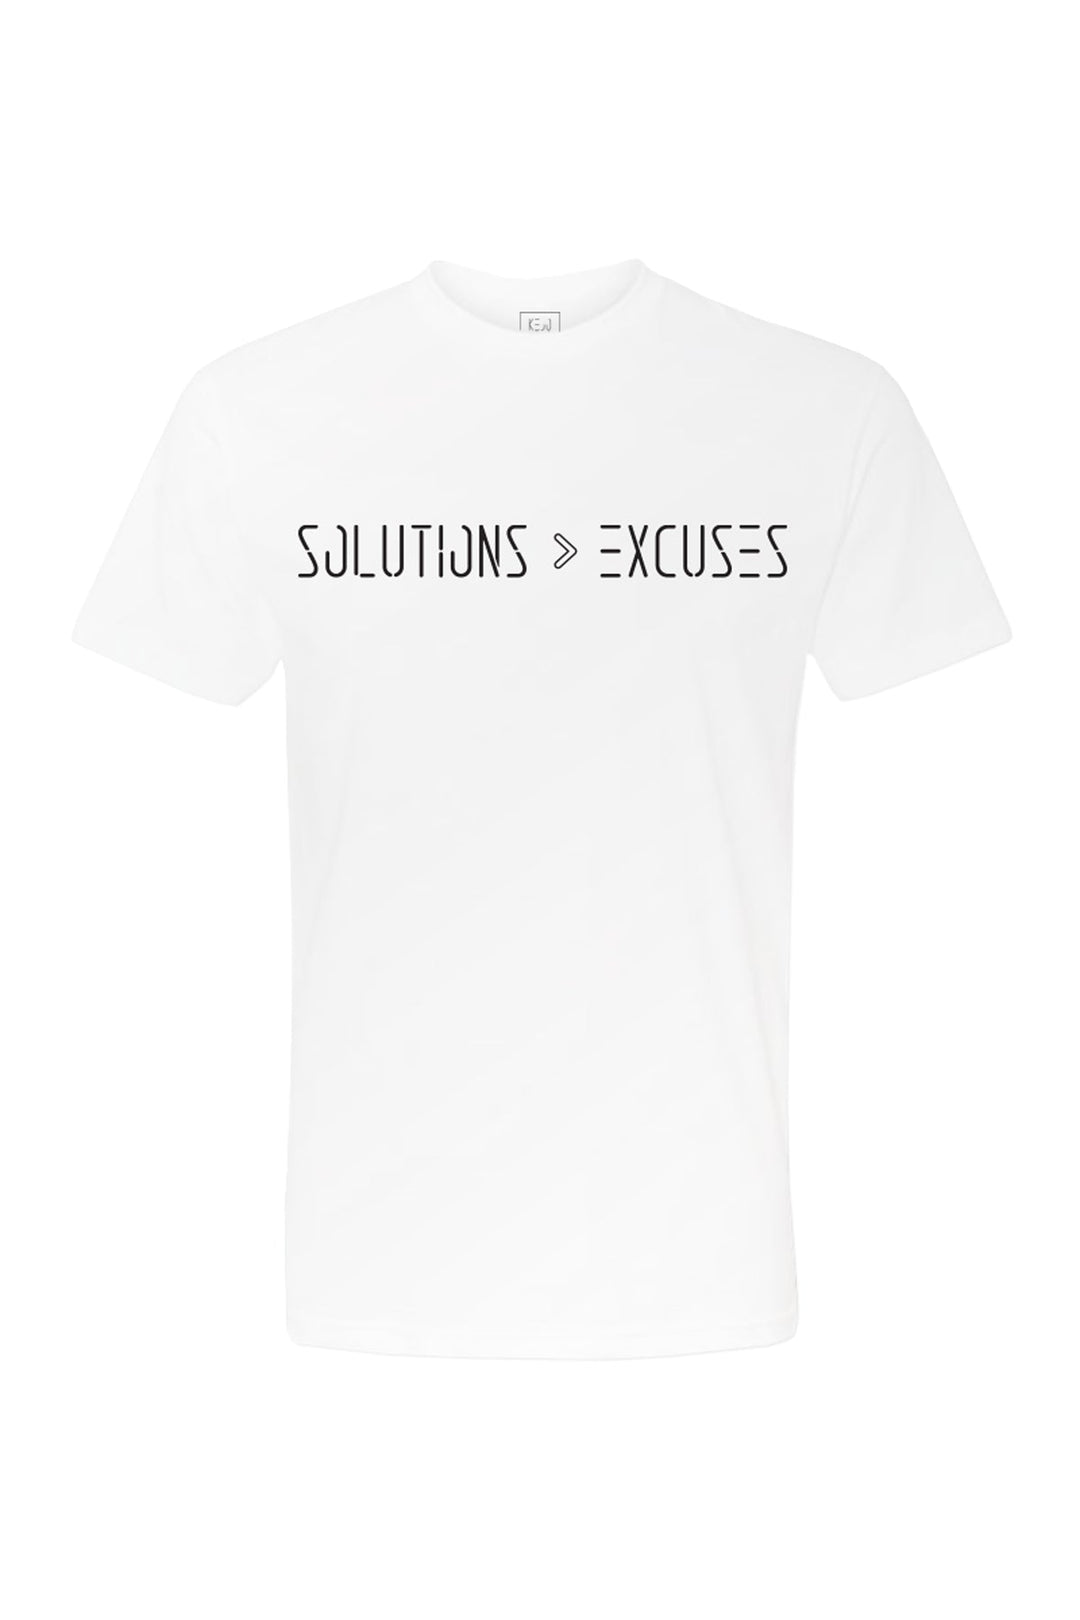 SOLUTIONS > EXCUSES - Unisex